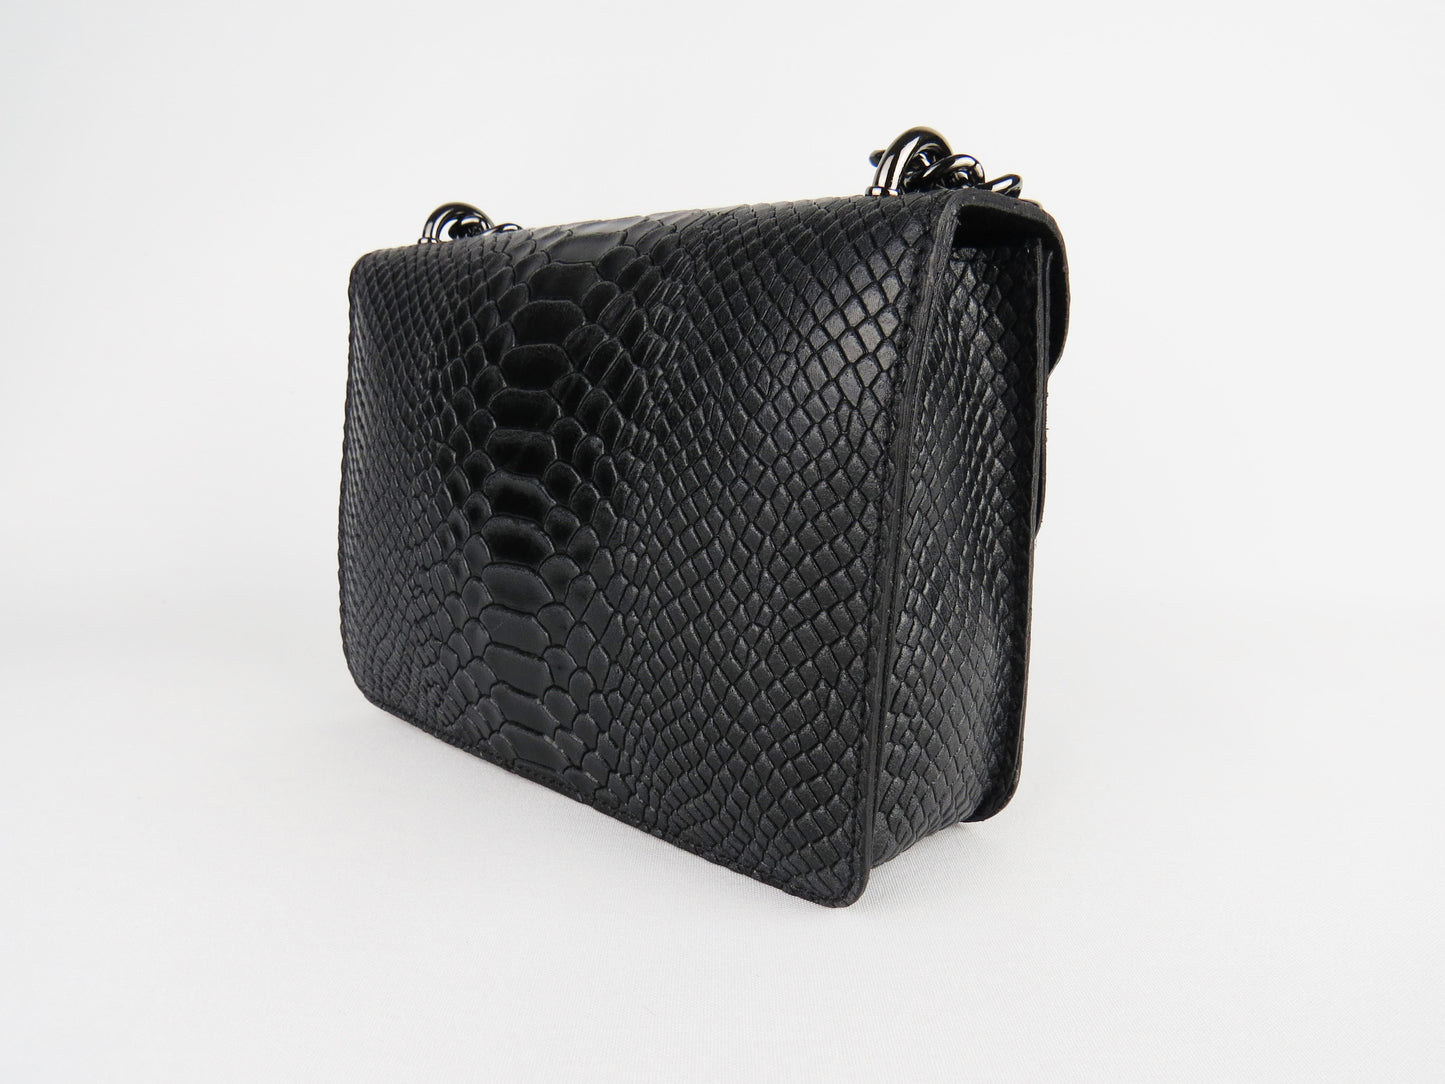 Genuine Leather Snake Effect Black Handbag Christmas Present For Her